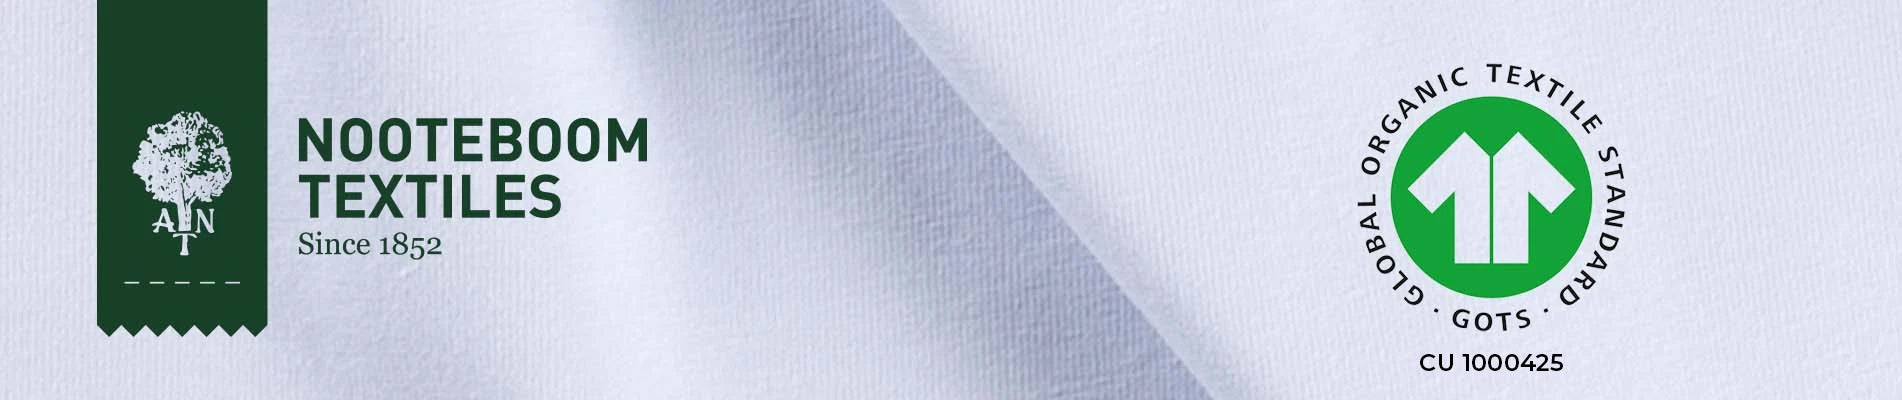 GOTS - Global Organic Textile Standard | Nooteboom Textiles